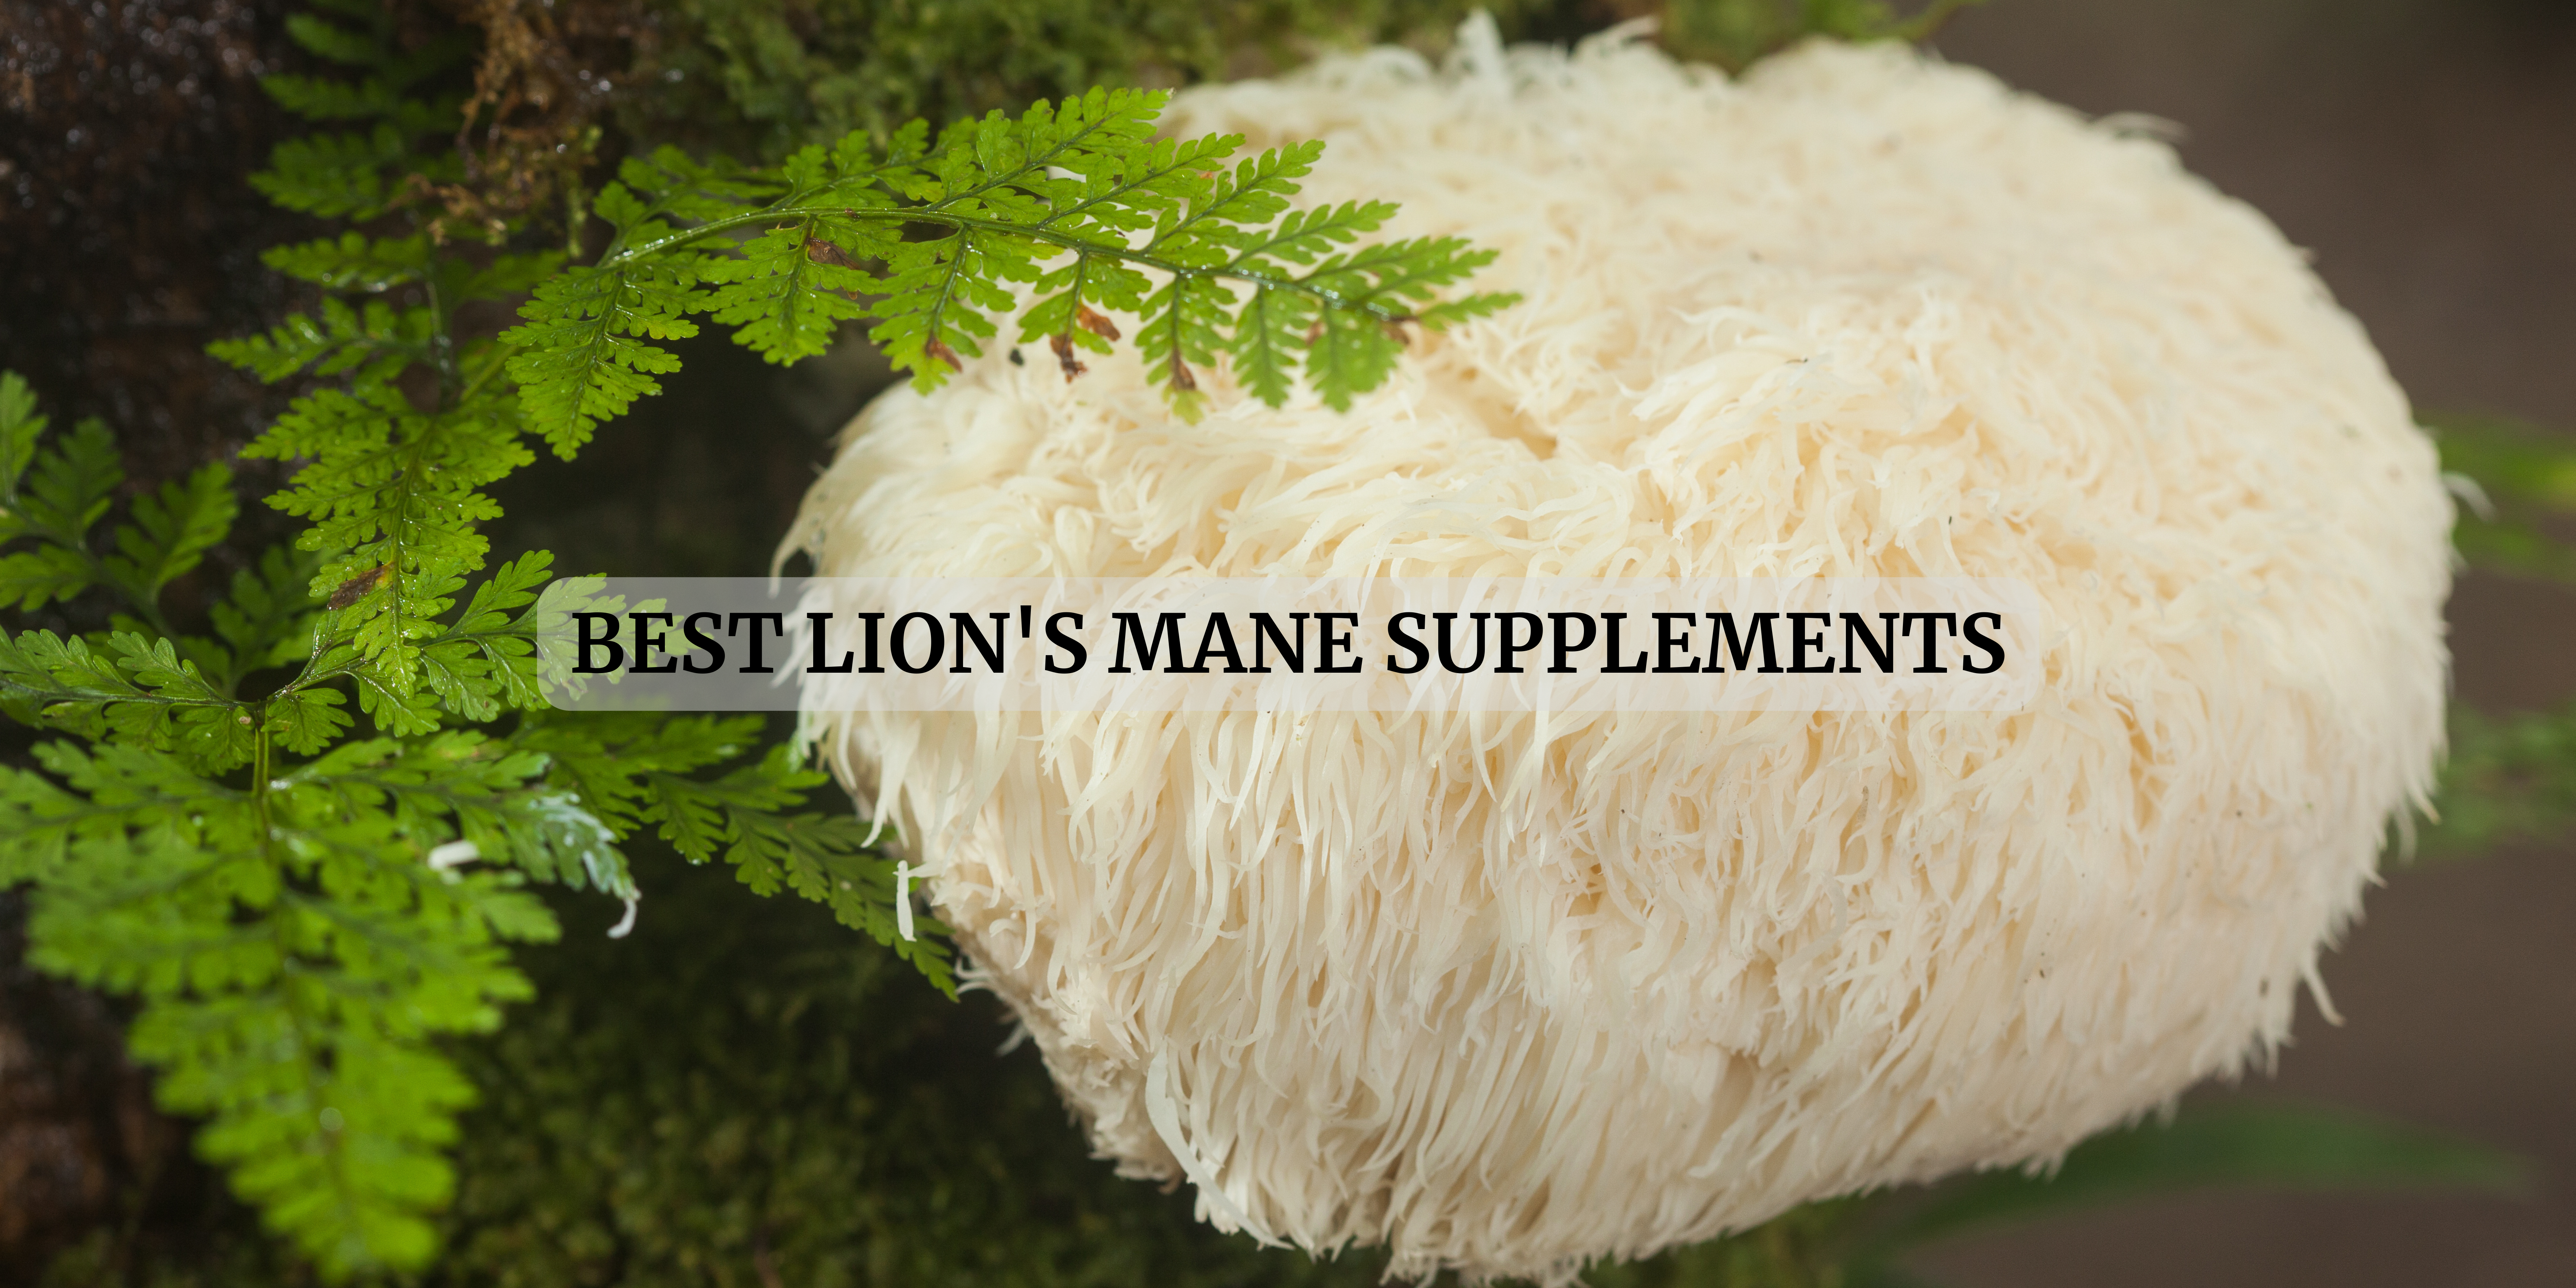 lion's mane supplements in France